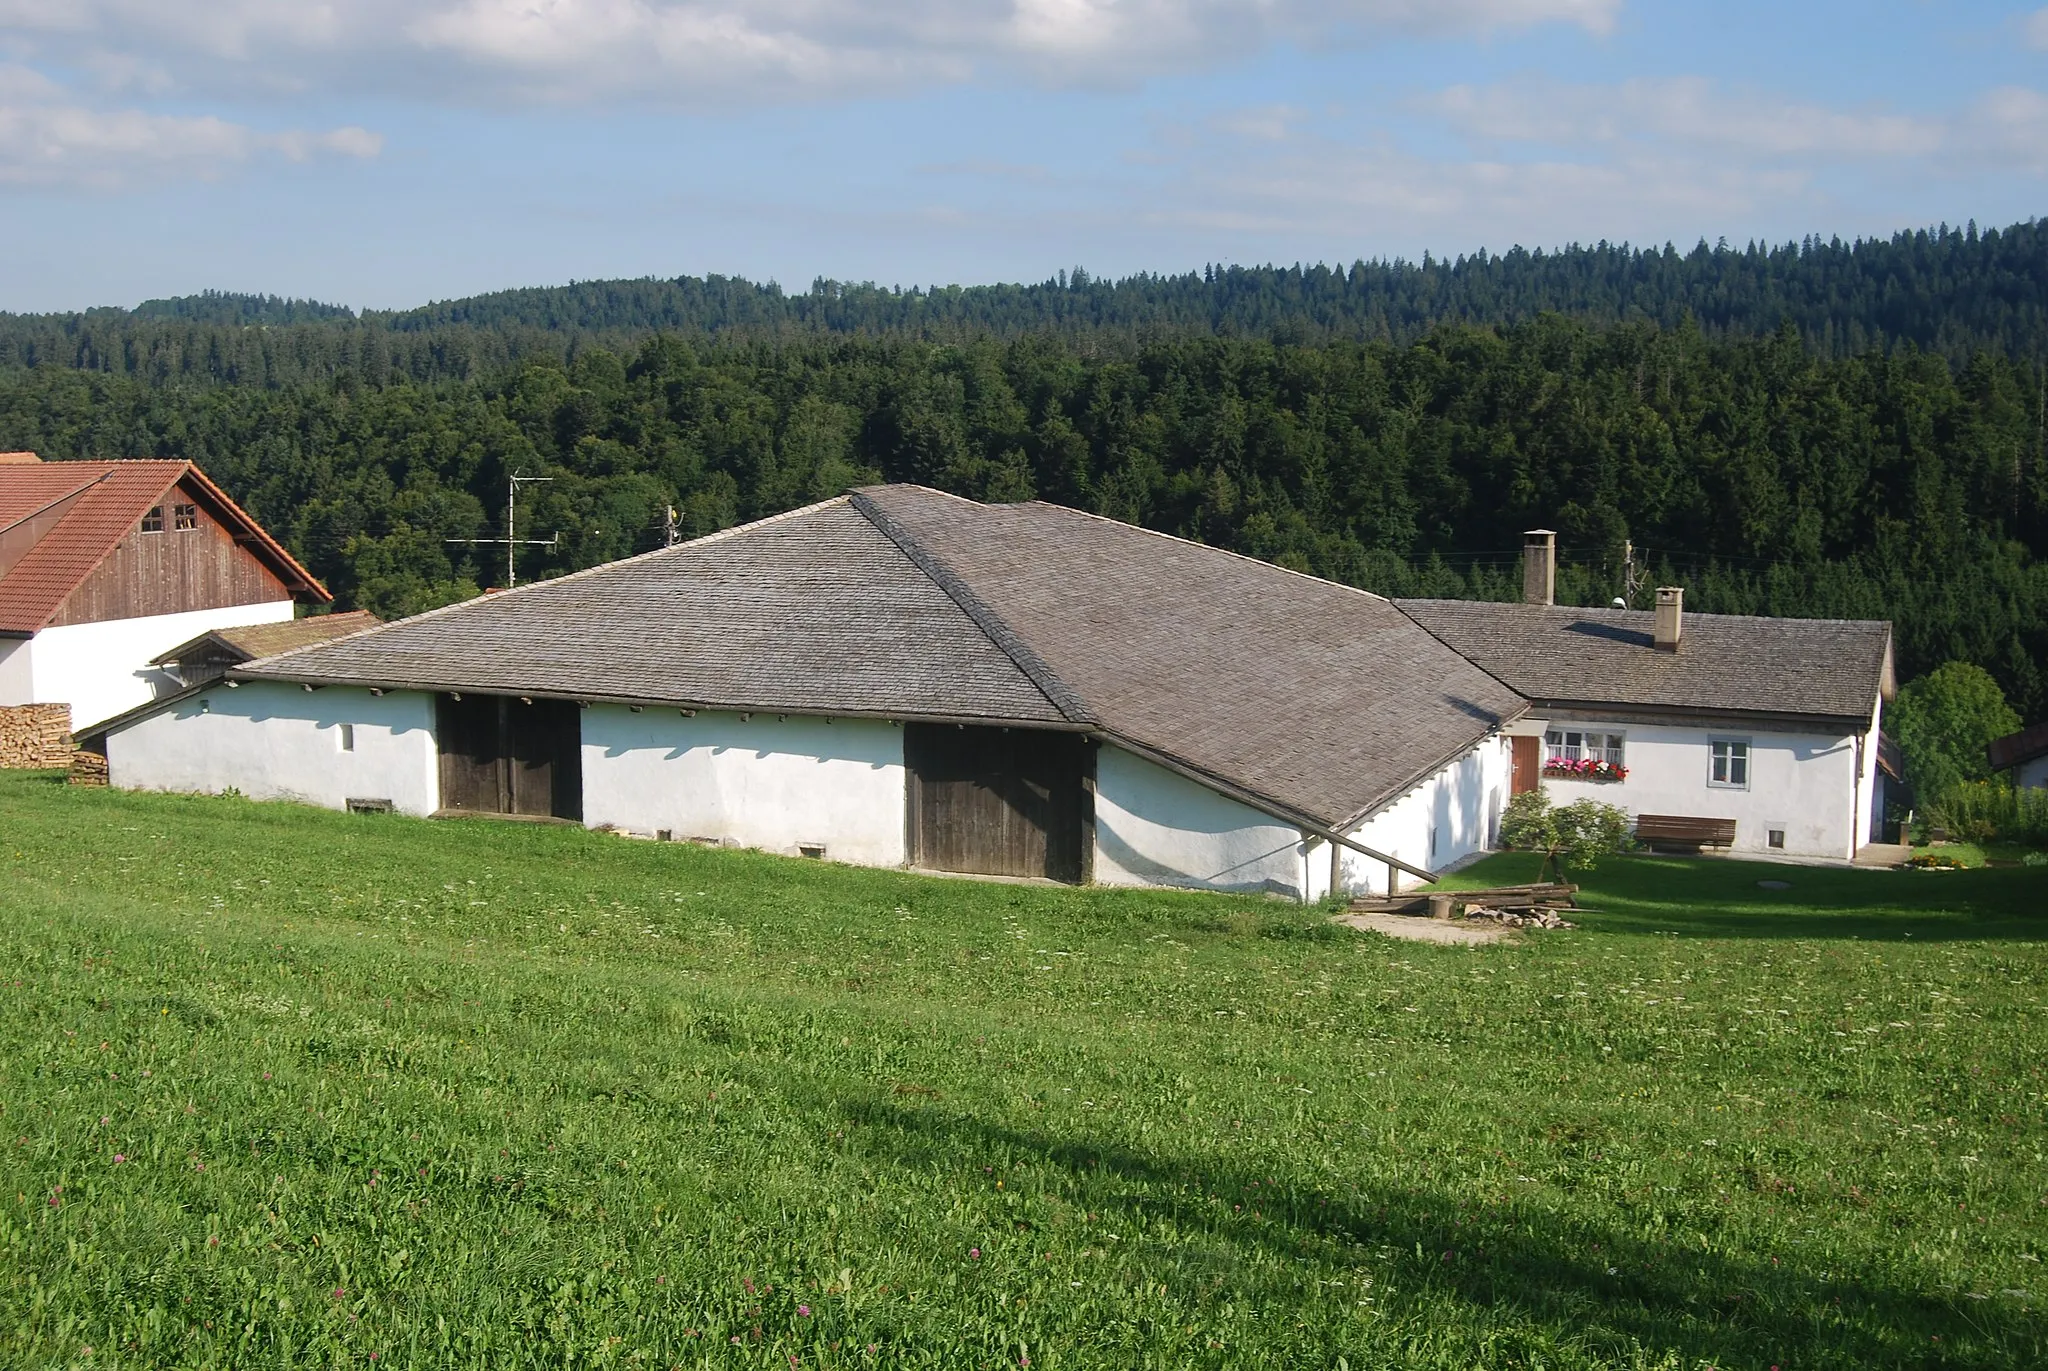 Photo showing: Jurassic Rural Museum at Les Genevez, canton of Jura, Switzerland